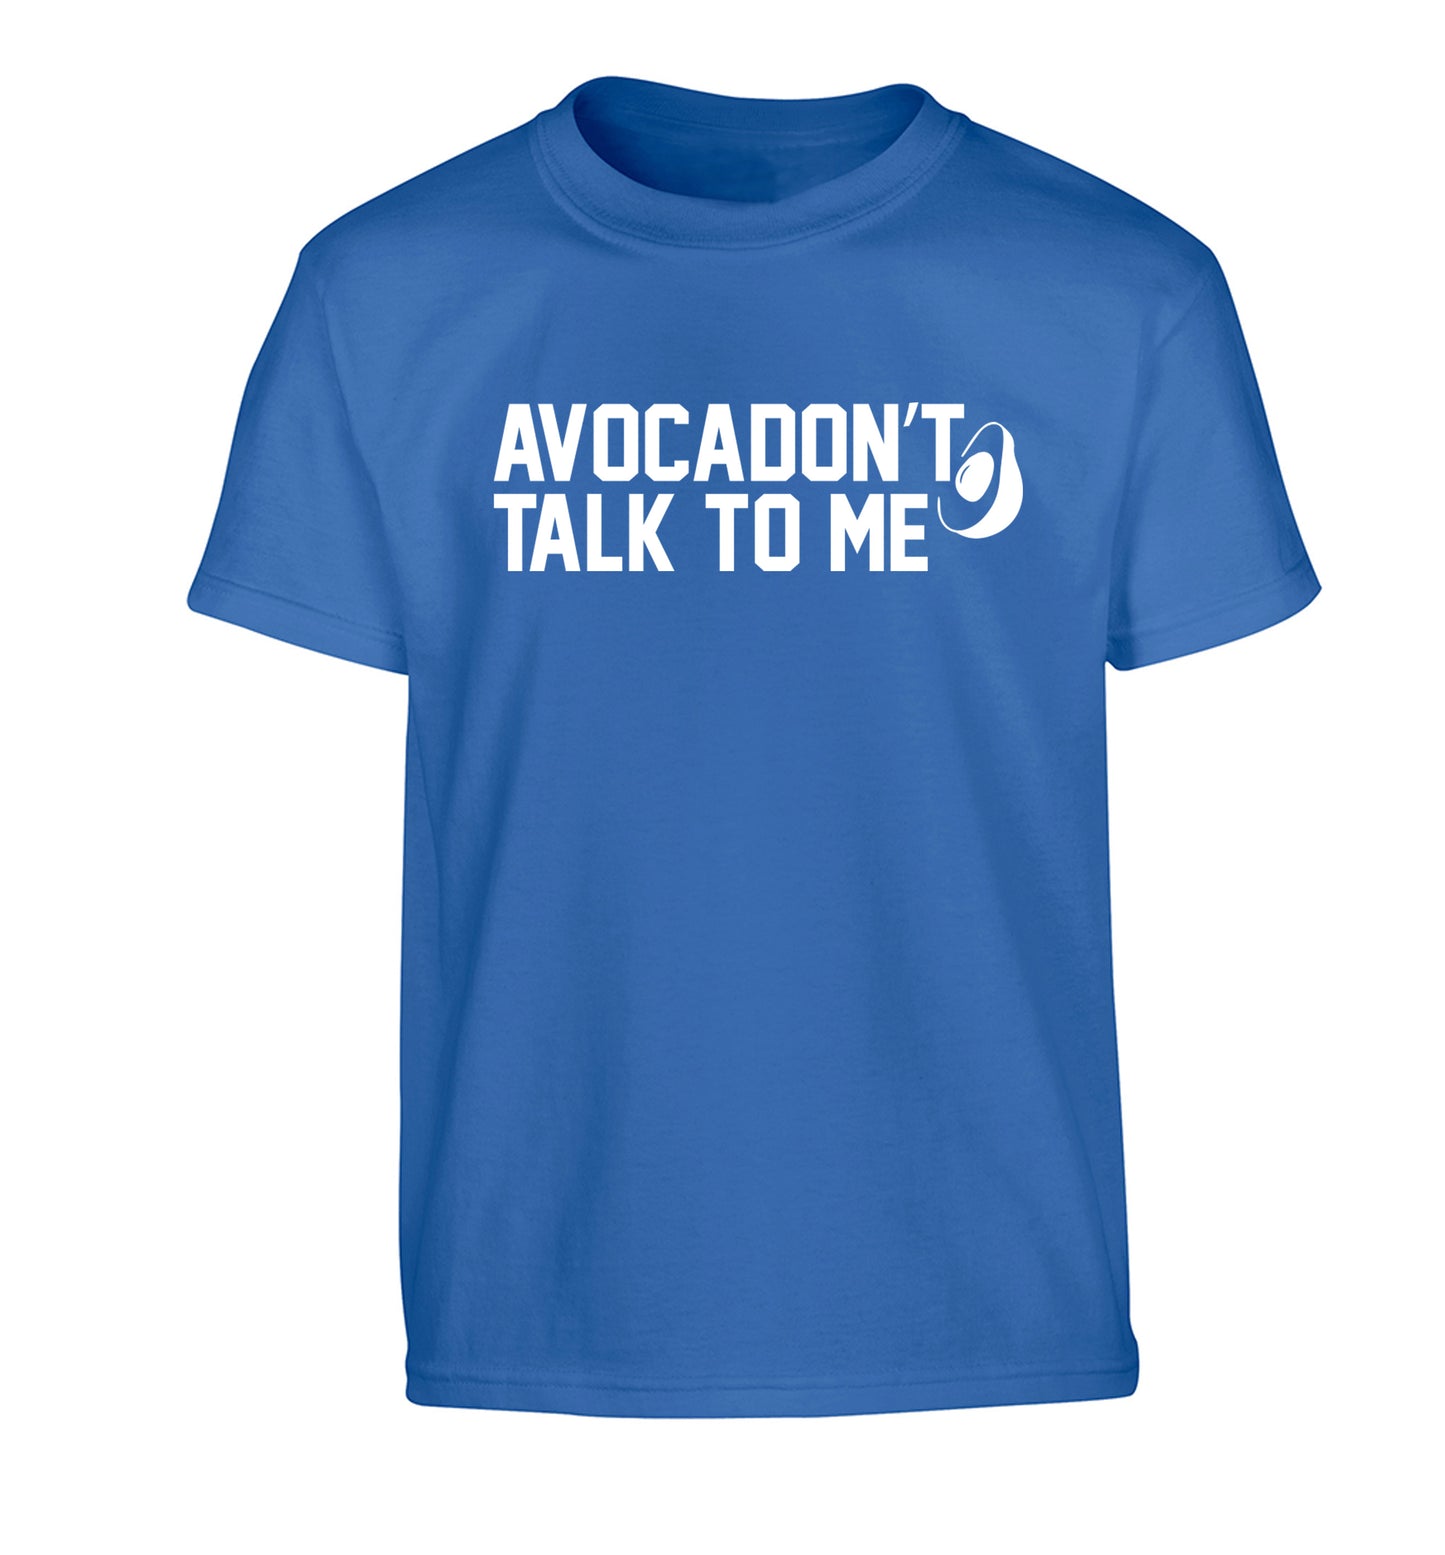 Avocadon't talk to me Children's blue Tshirt 12-14 Years